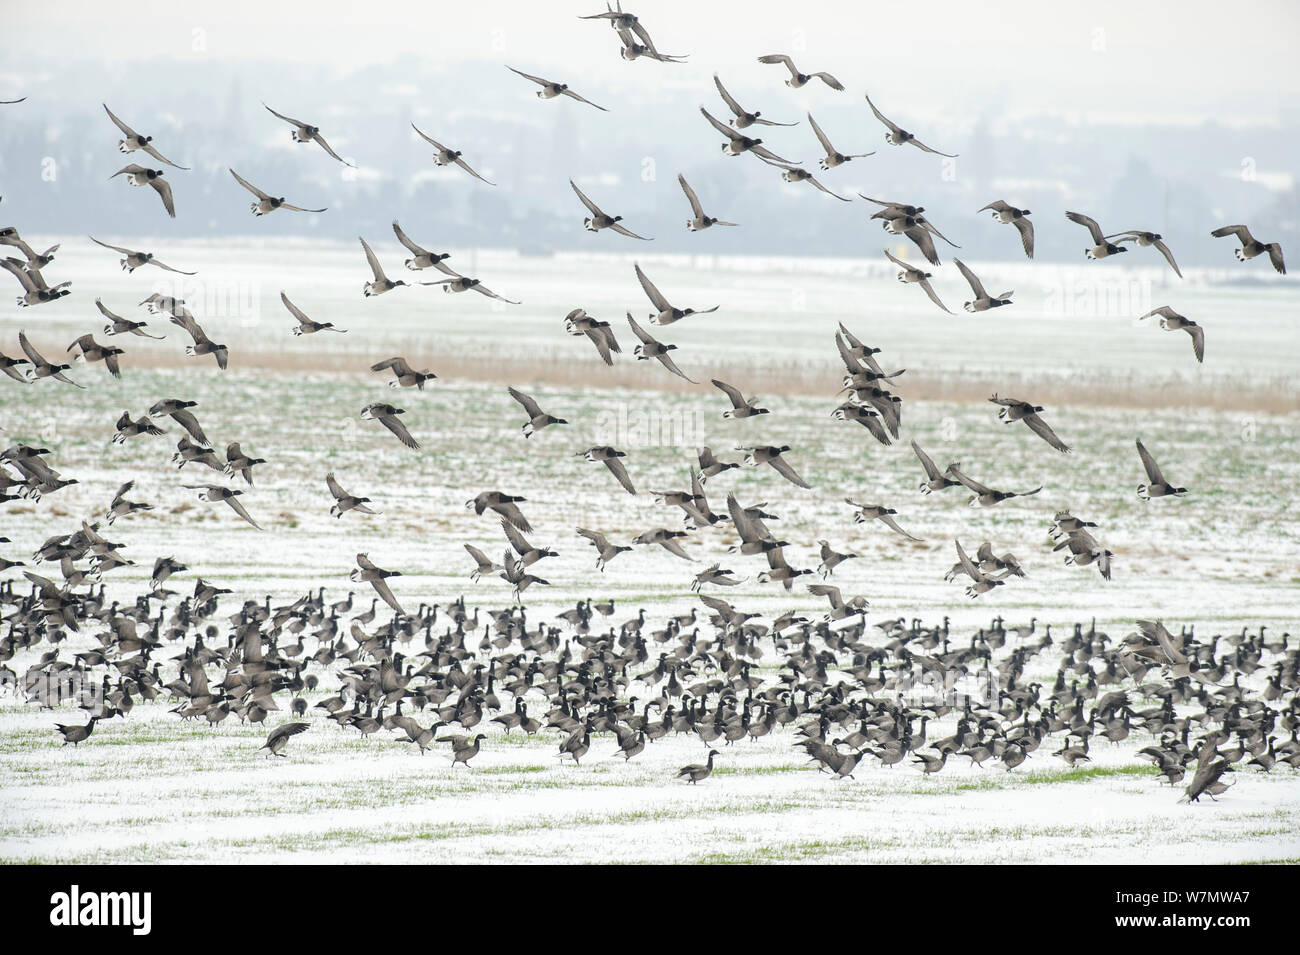 Flock of Dark-bellied brent geese (Branta bernicla) taking off from grazing field, South Swale, Kent, England, UK, February. Stock Photo